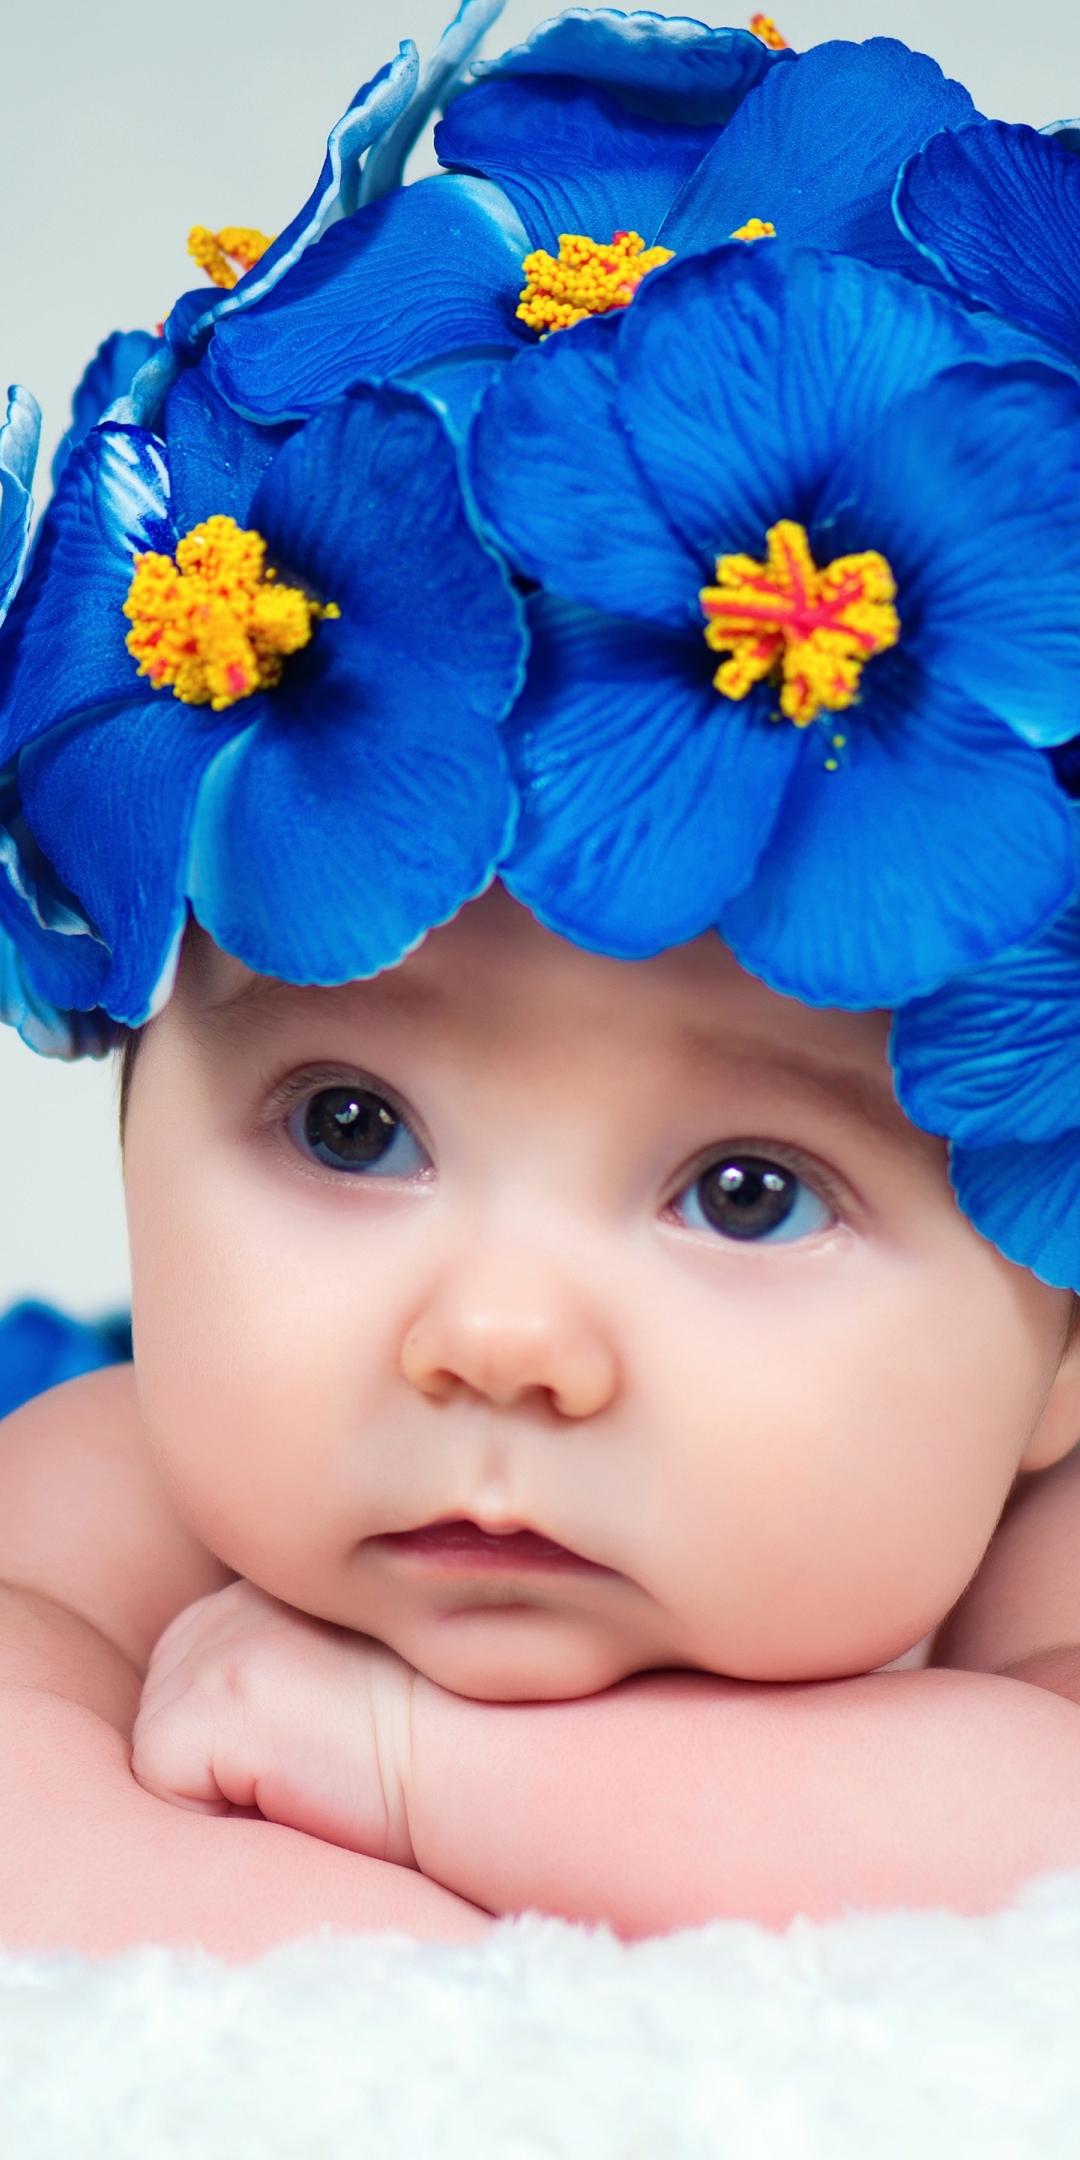 Cute baby, calm, flowers crown, 1080x2160 wallpaper